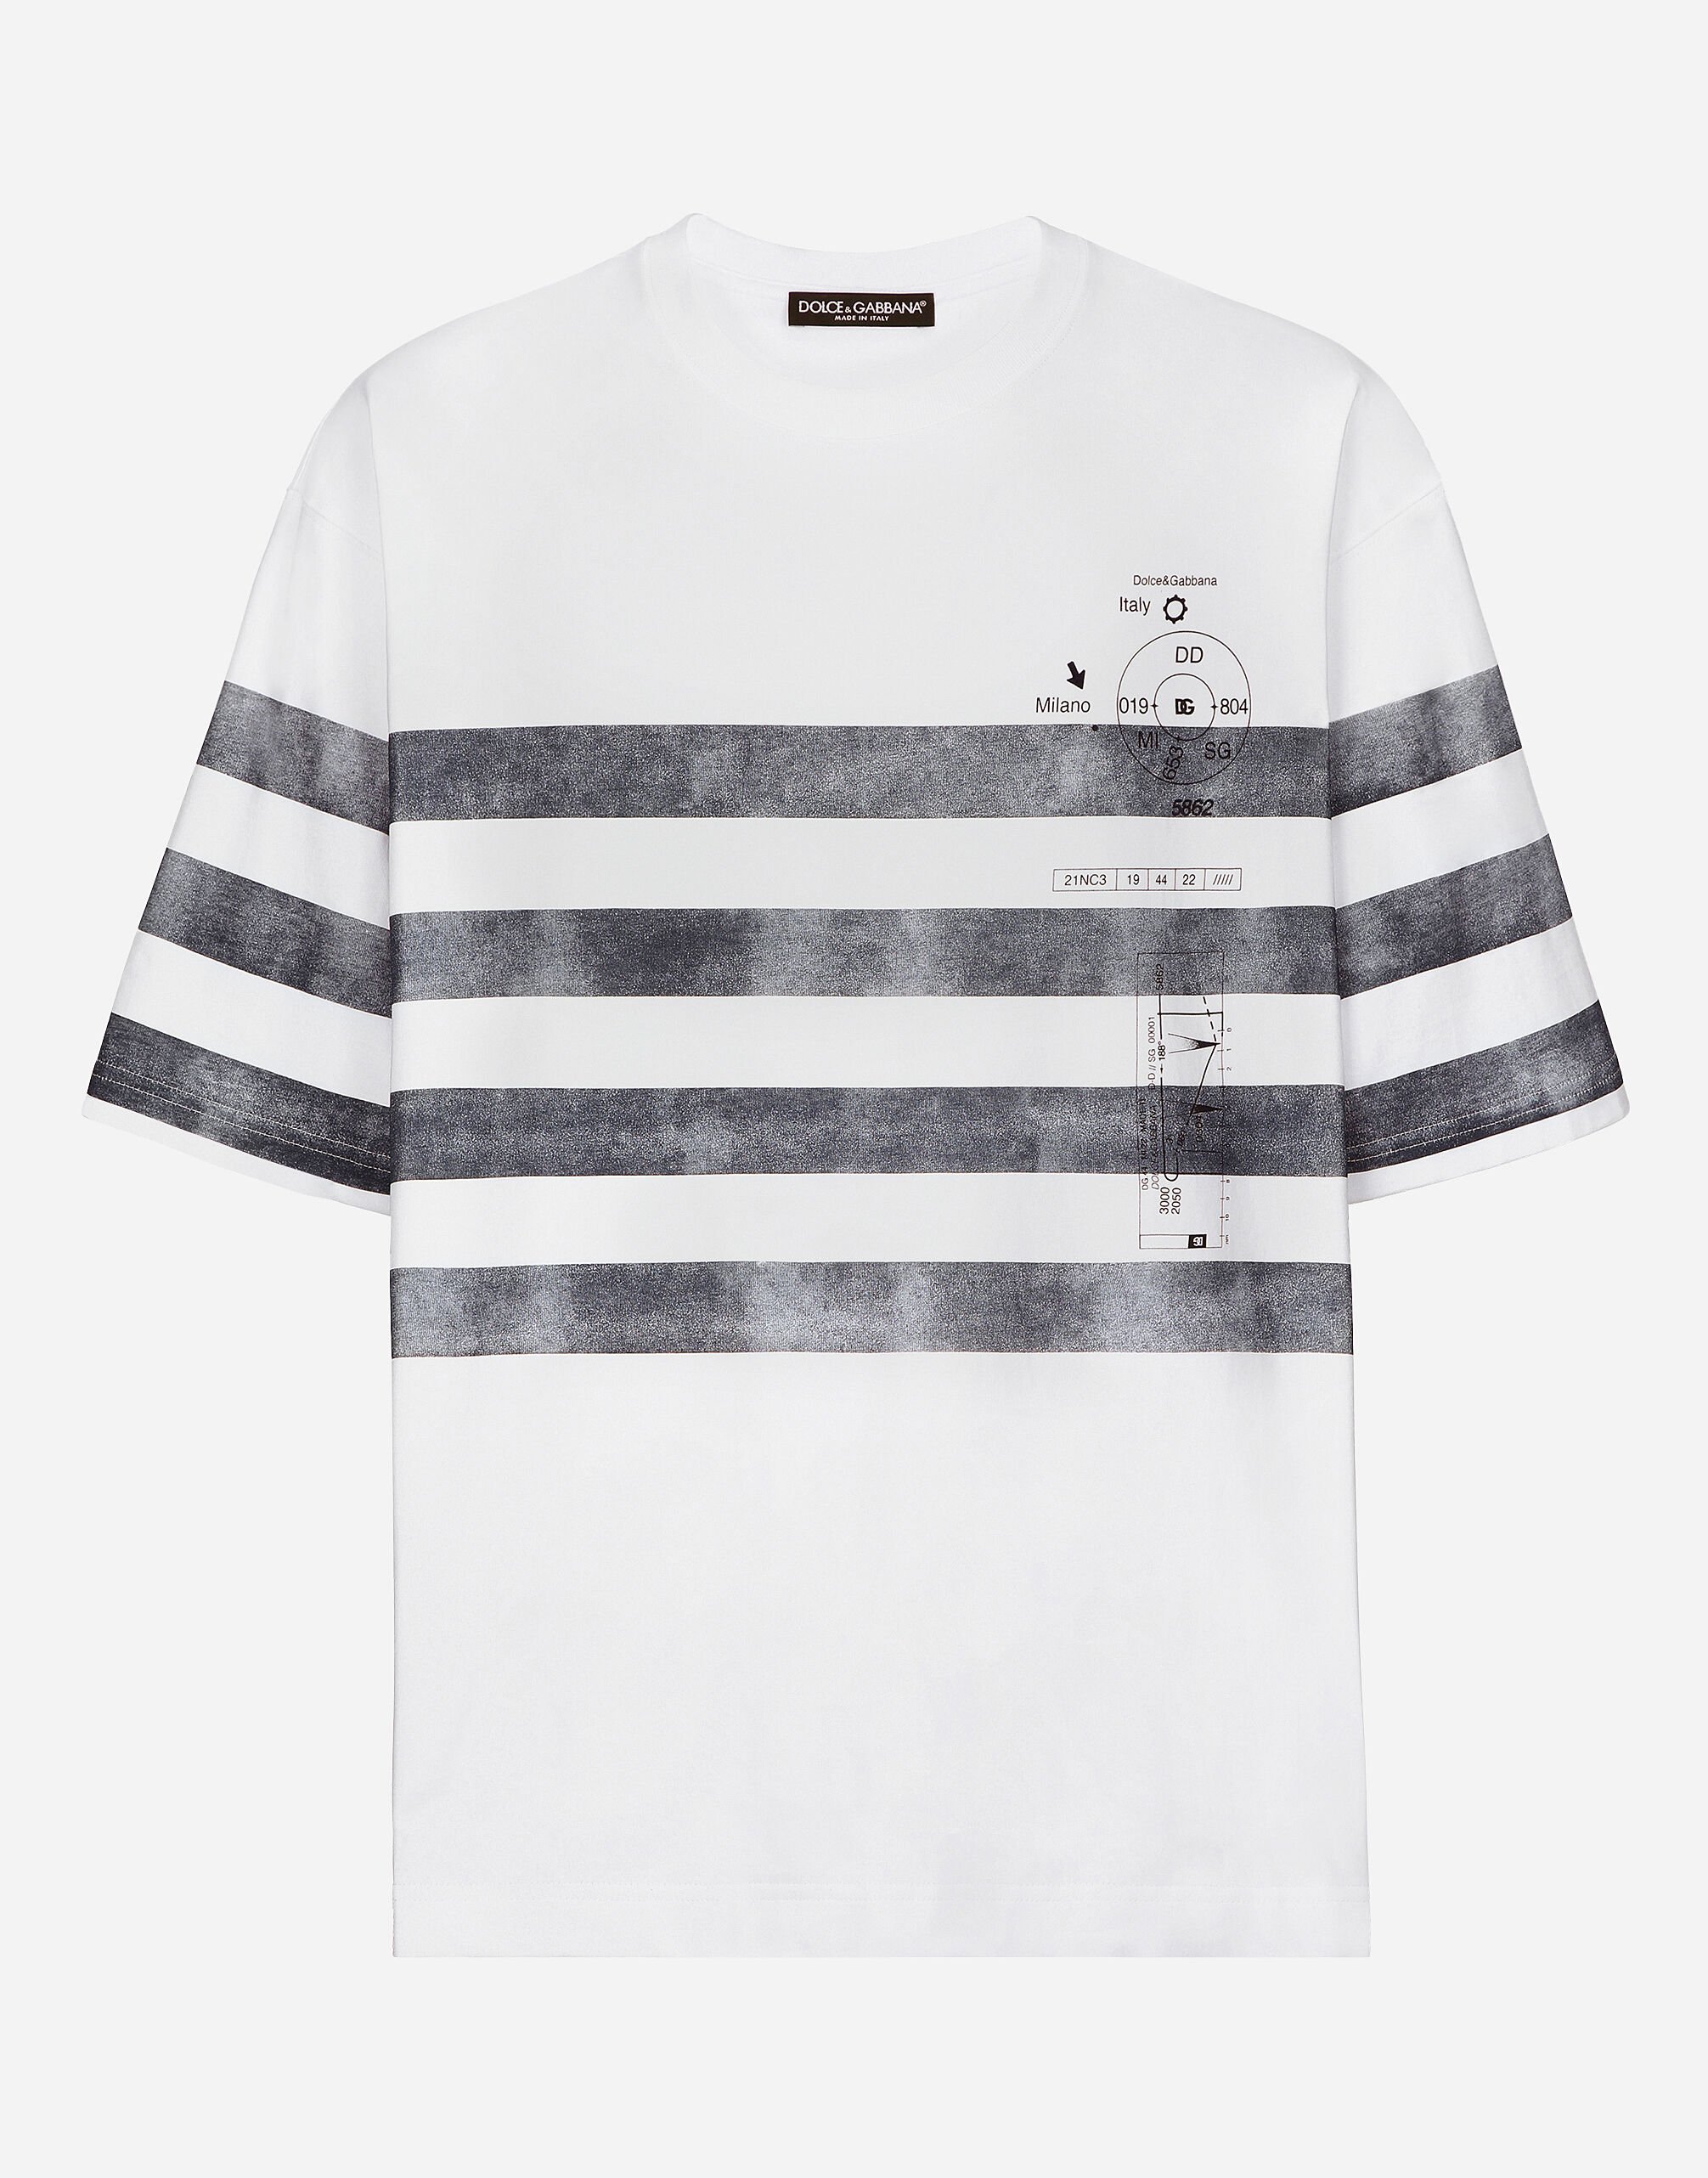 Dolce & Gabbana T-shirt manica corta stampa marina Stampa G8PB8THI7Z2